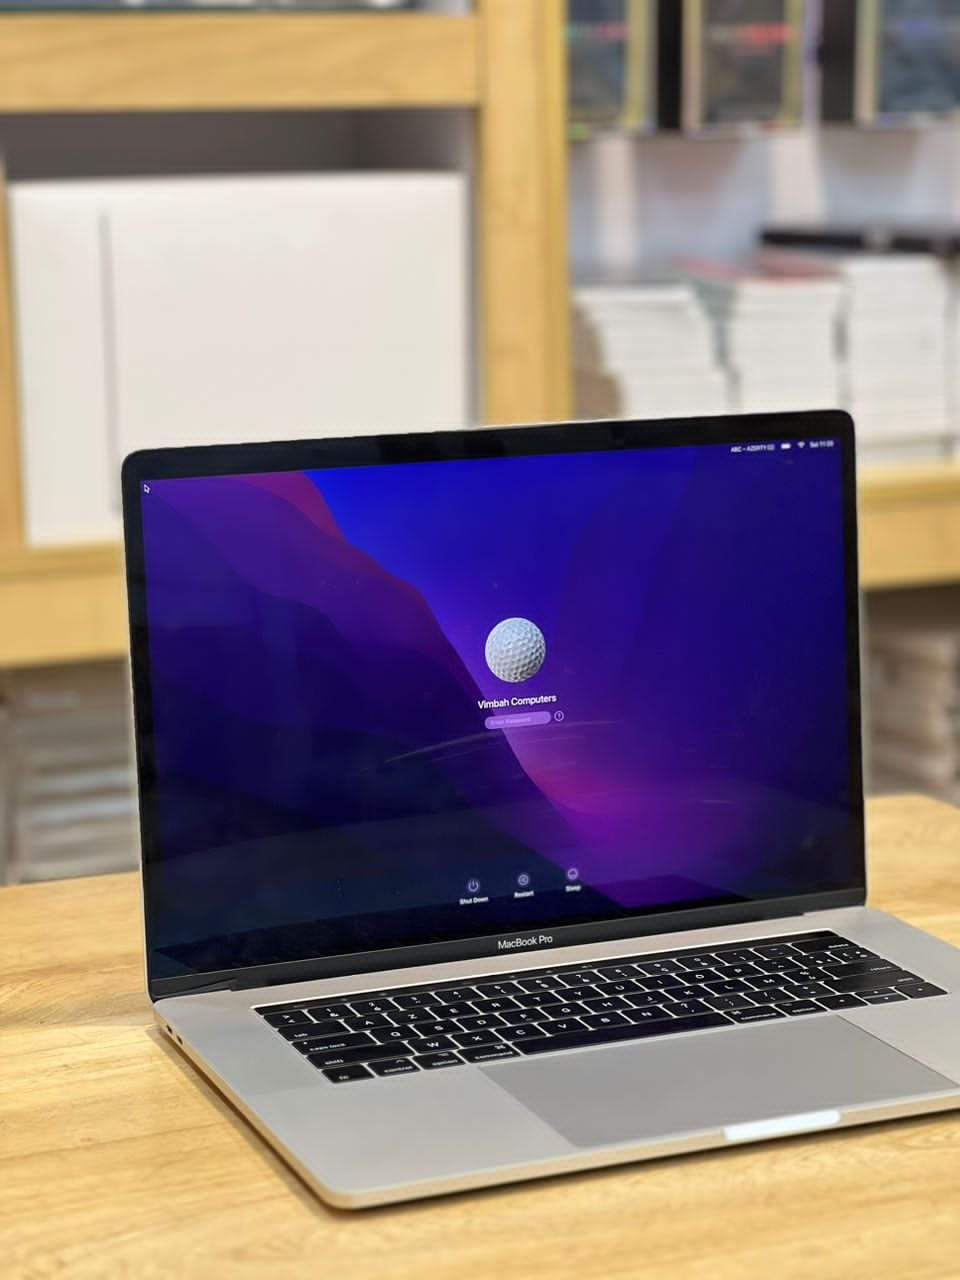 MacBook Pro corei9 ,2019 Retina display 16gb ram, 1TB 